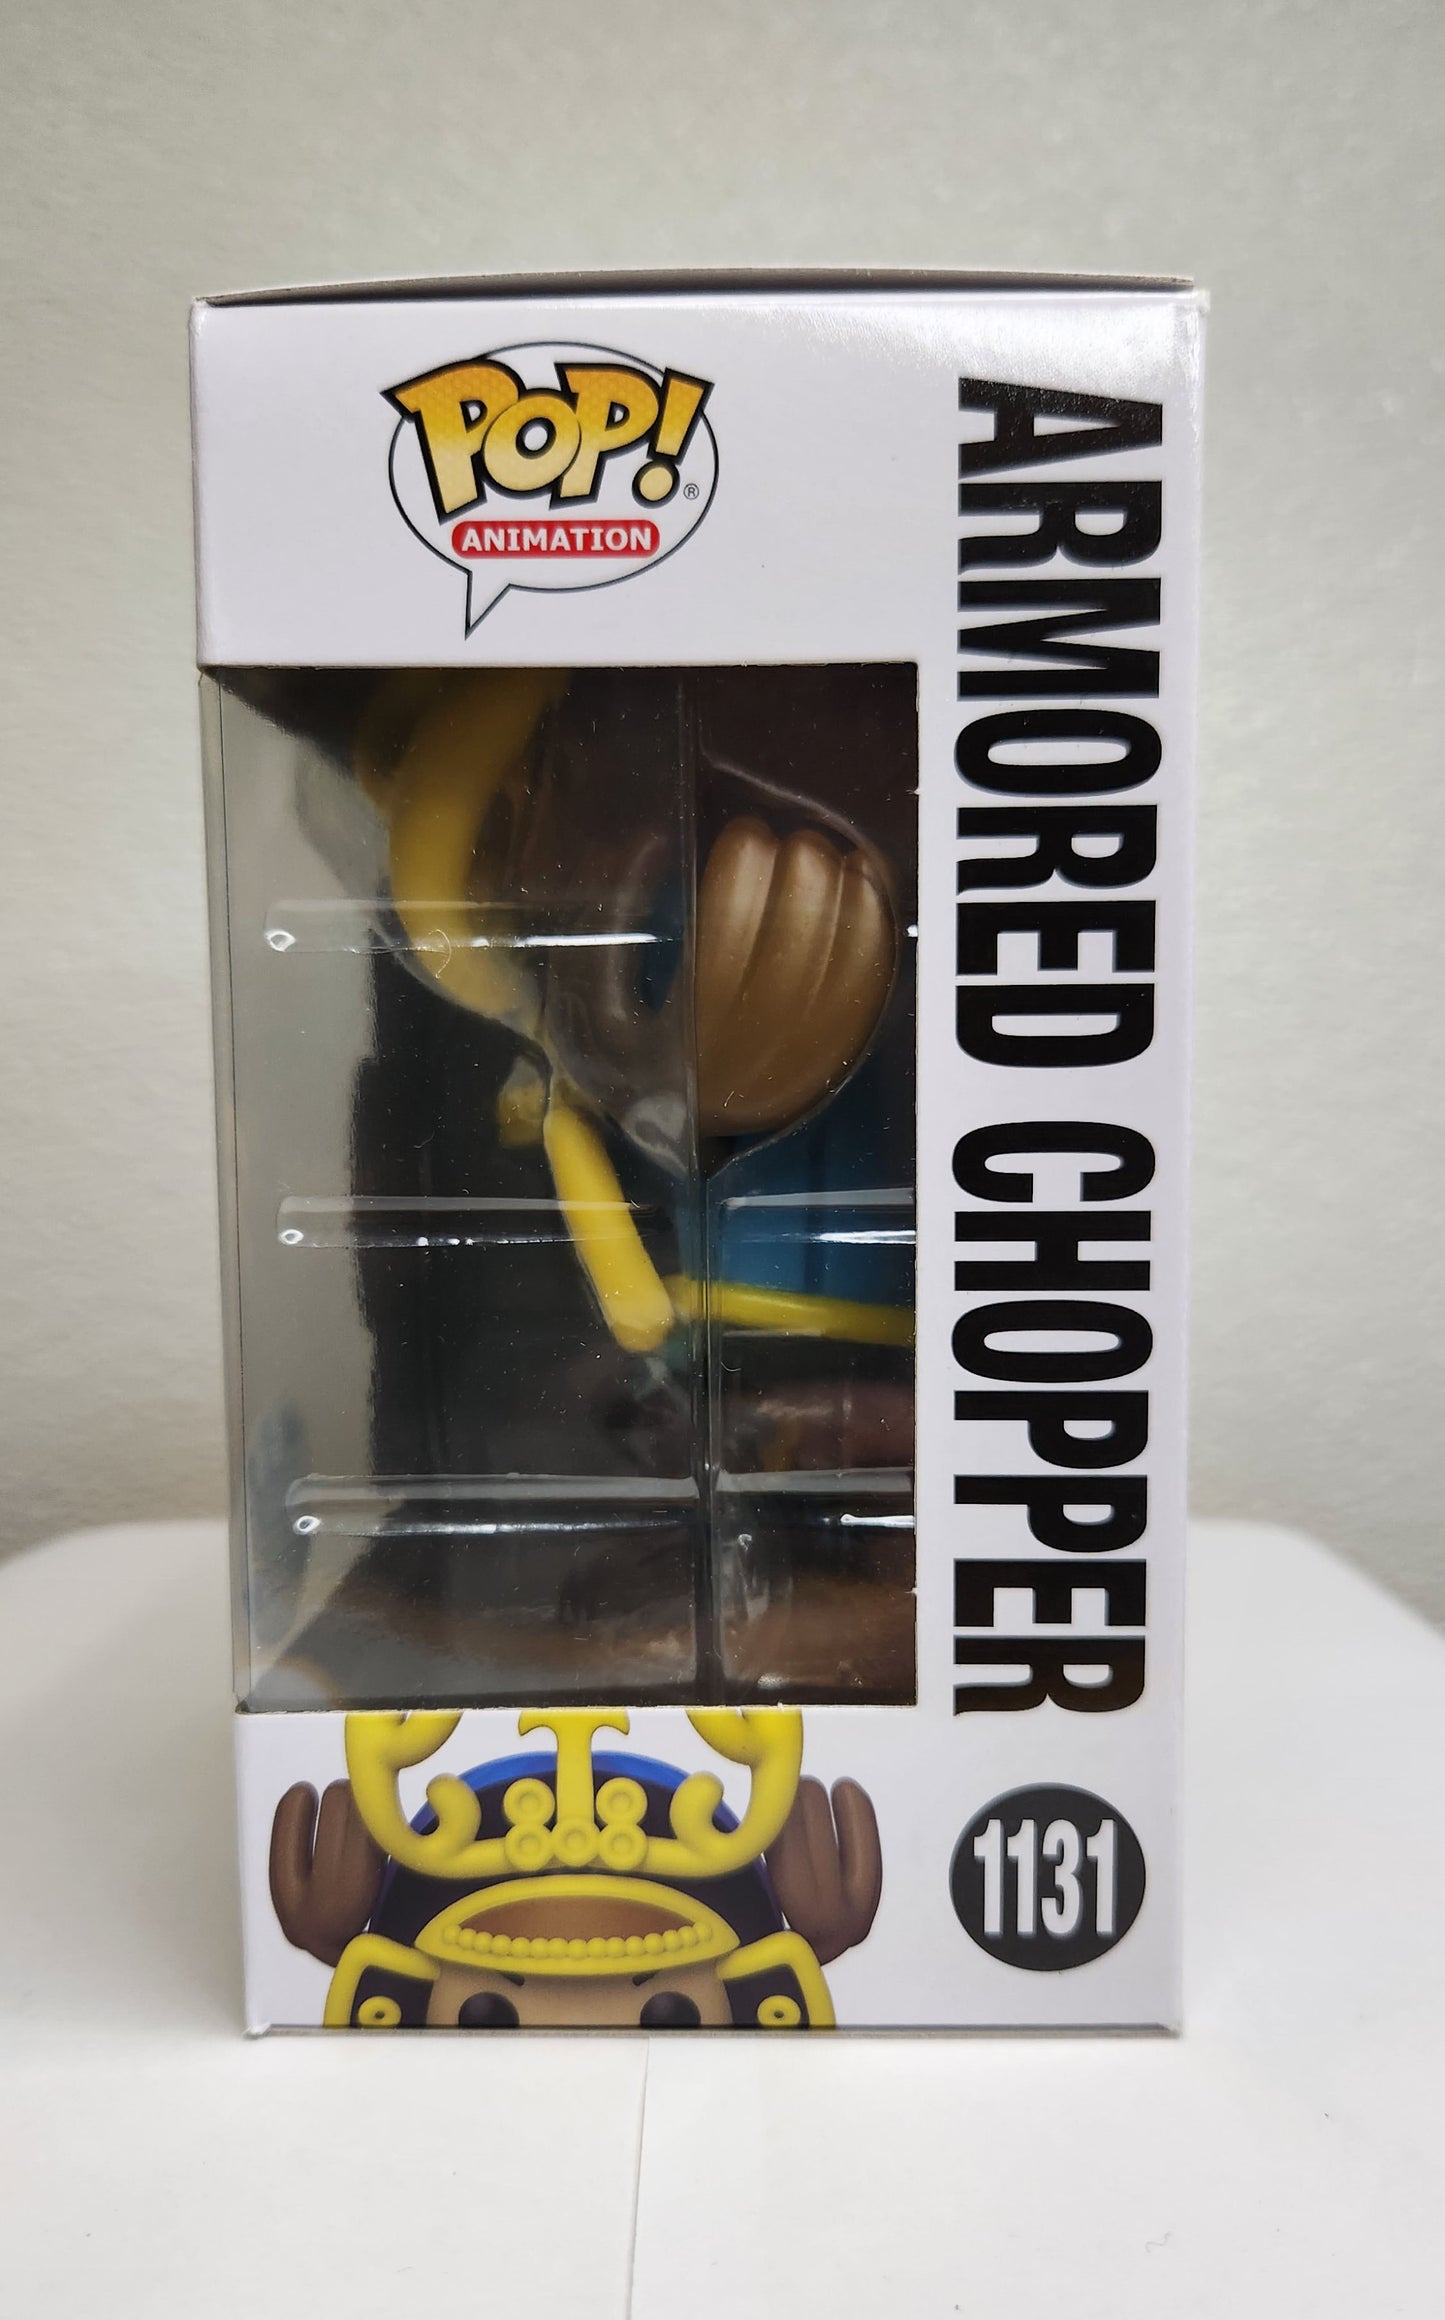 Figurine Pop One Piece #1131 pas cher : Chopper en Armure